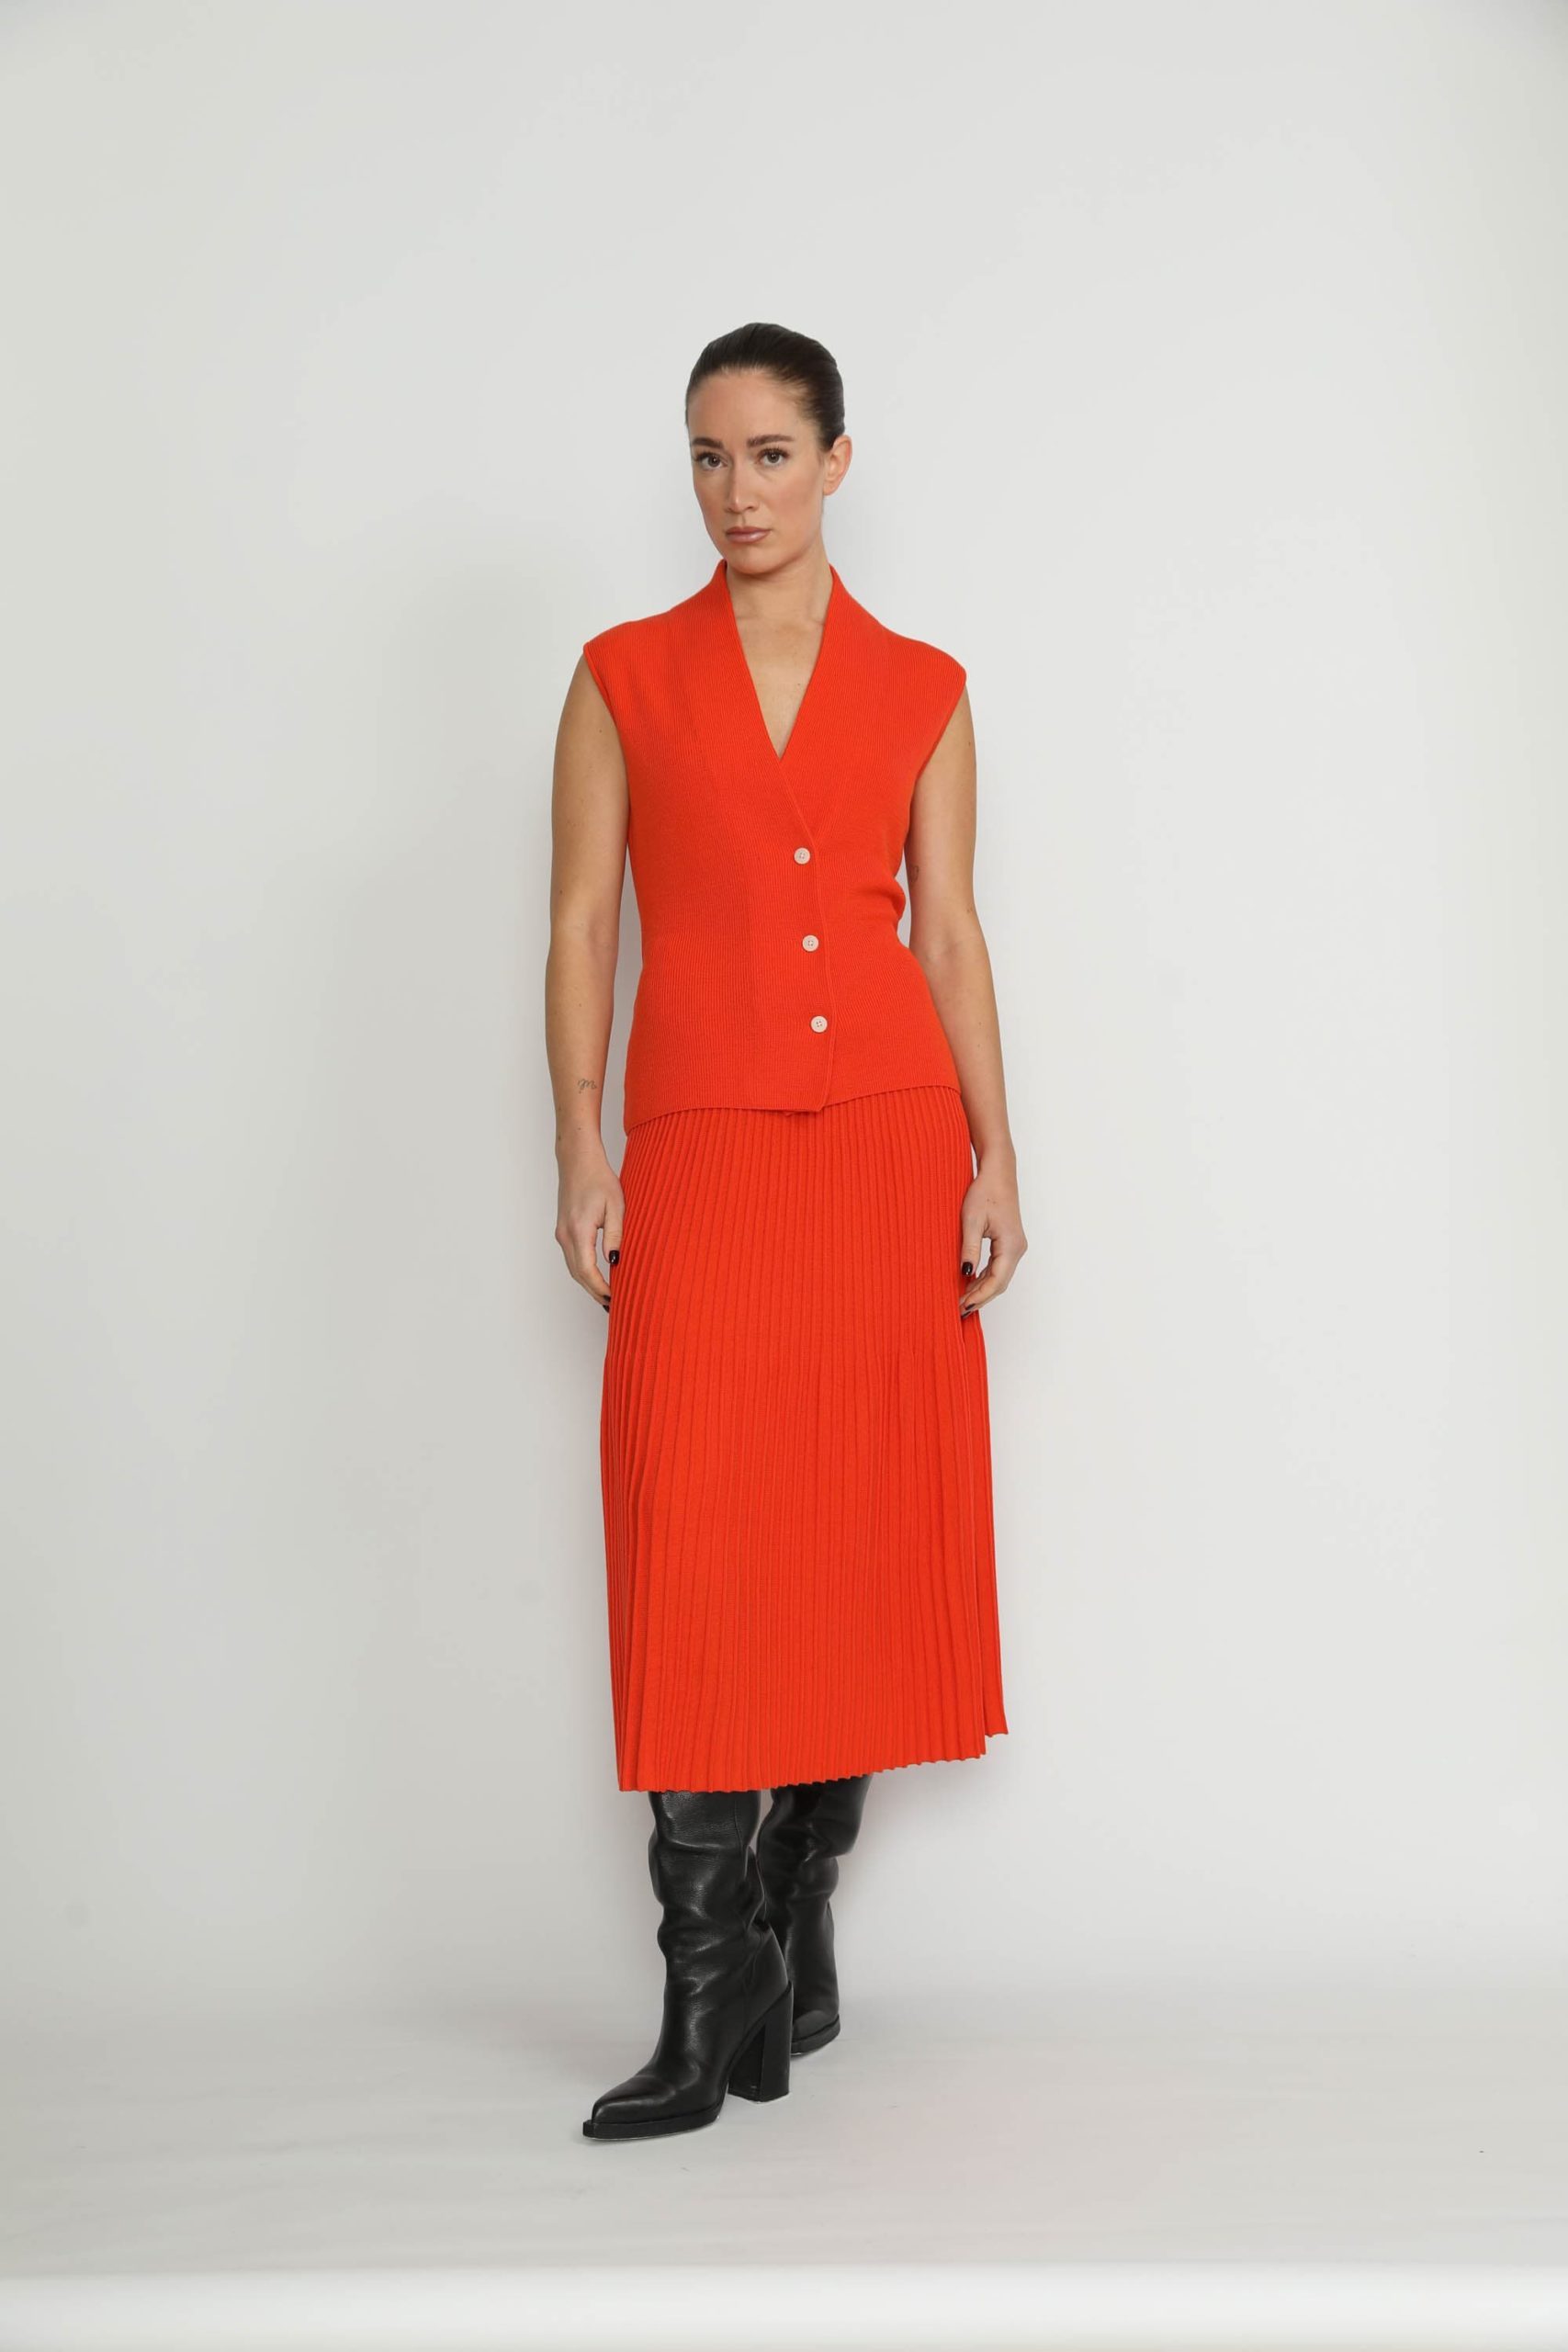 Arbon Waistcoat – Arbon Orange Knit Waistcoat